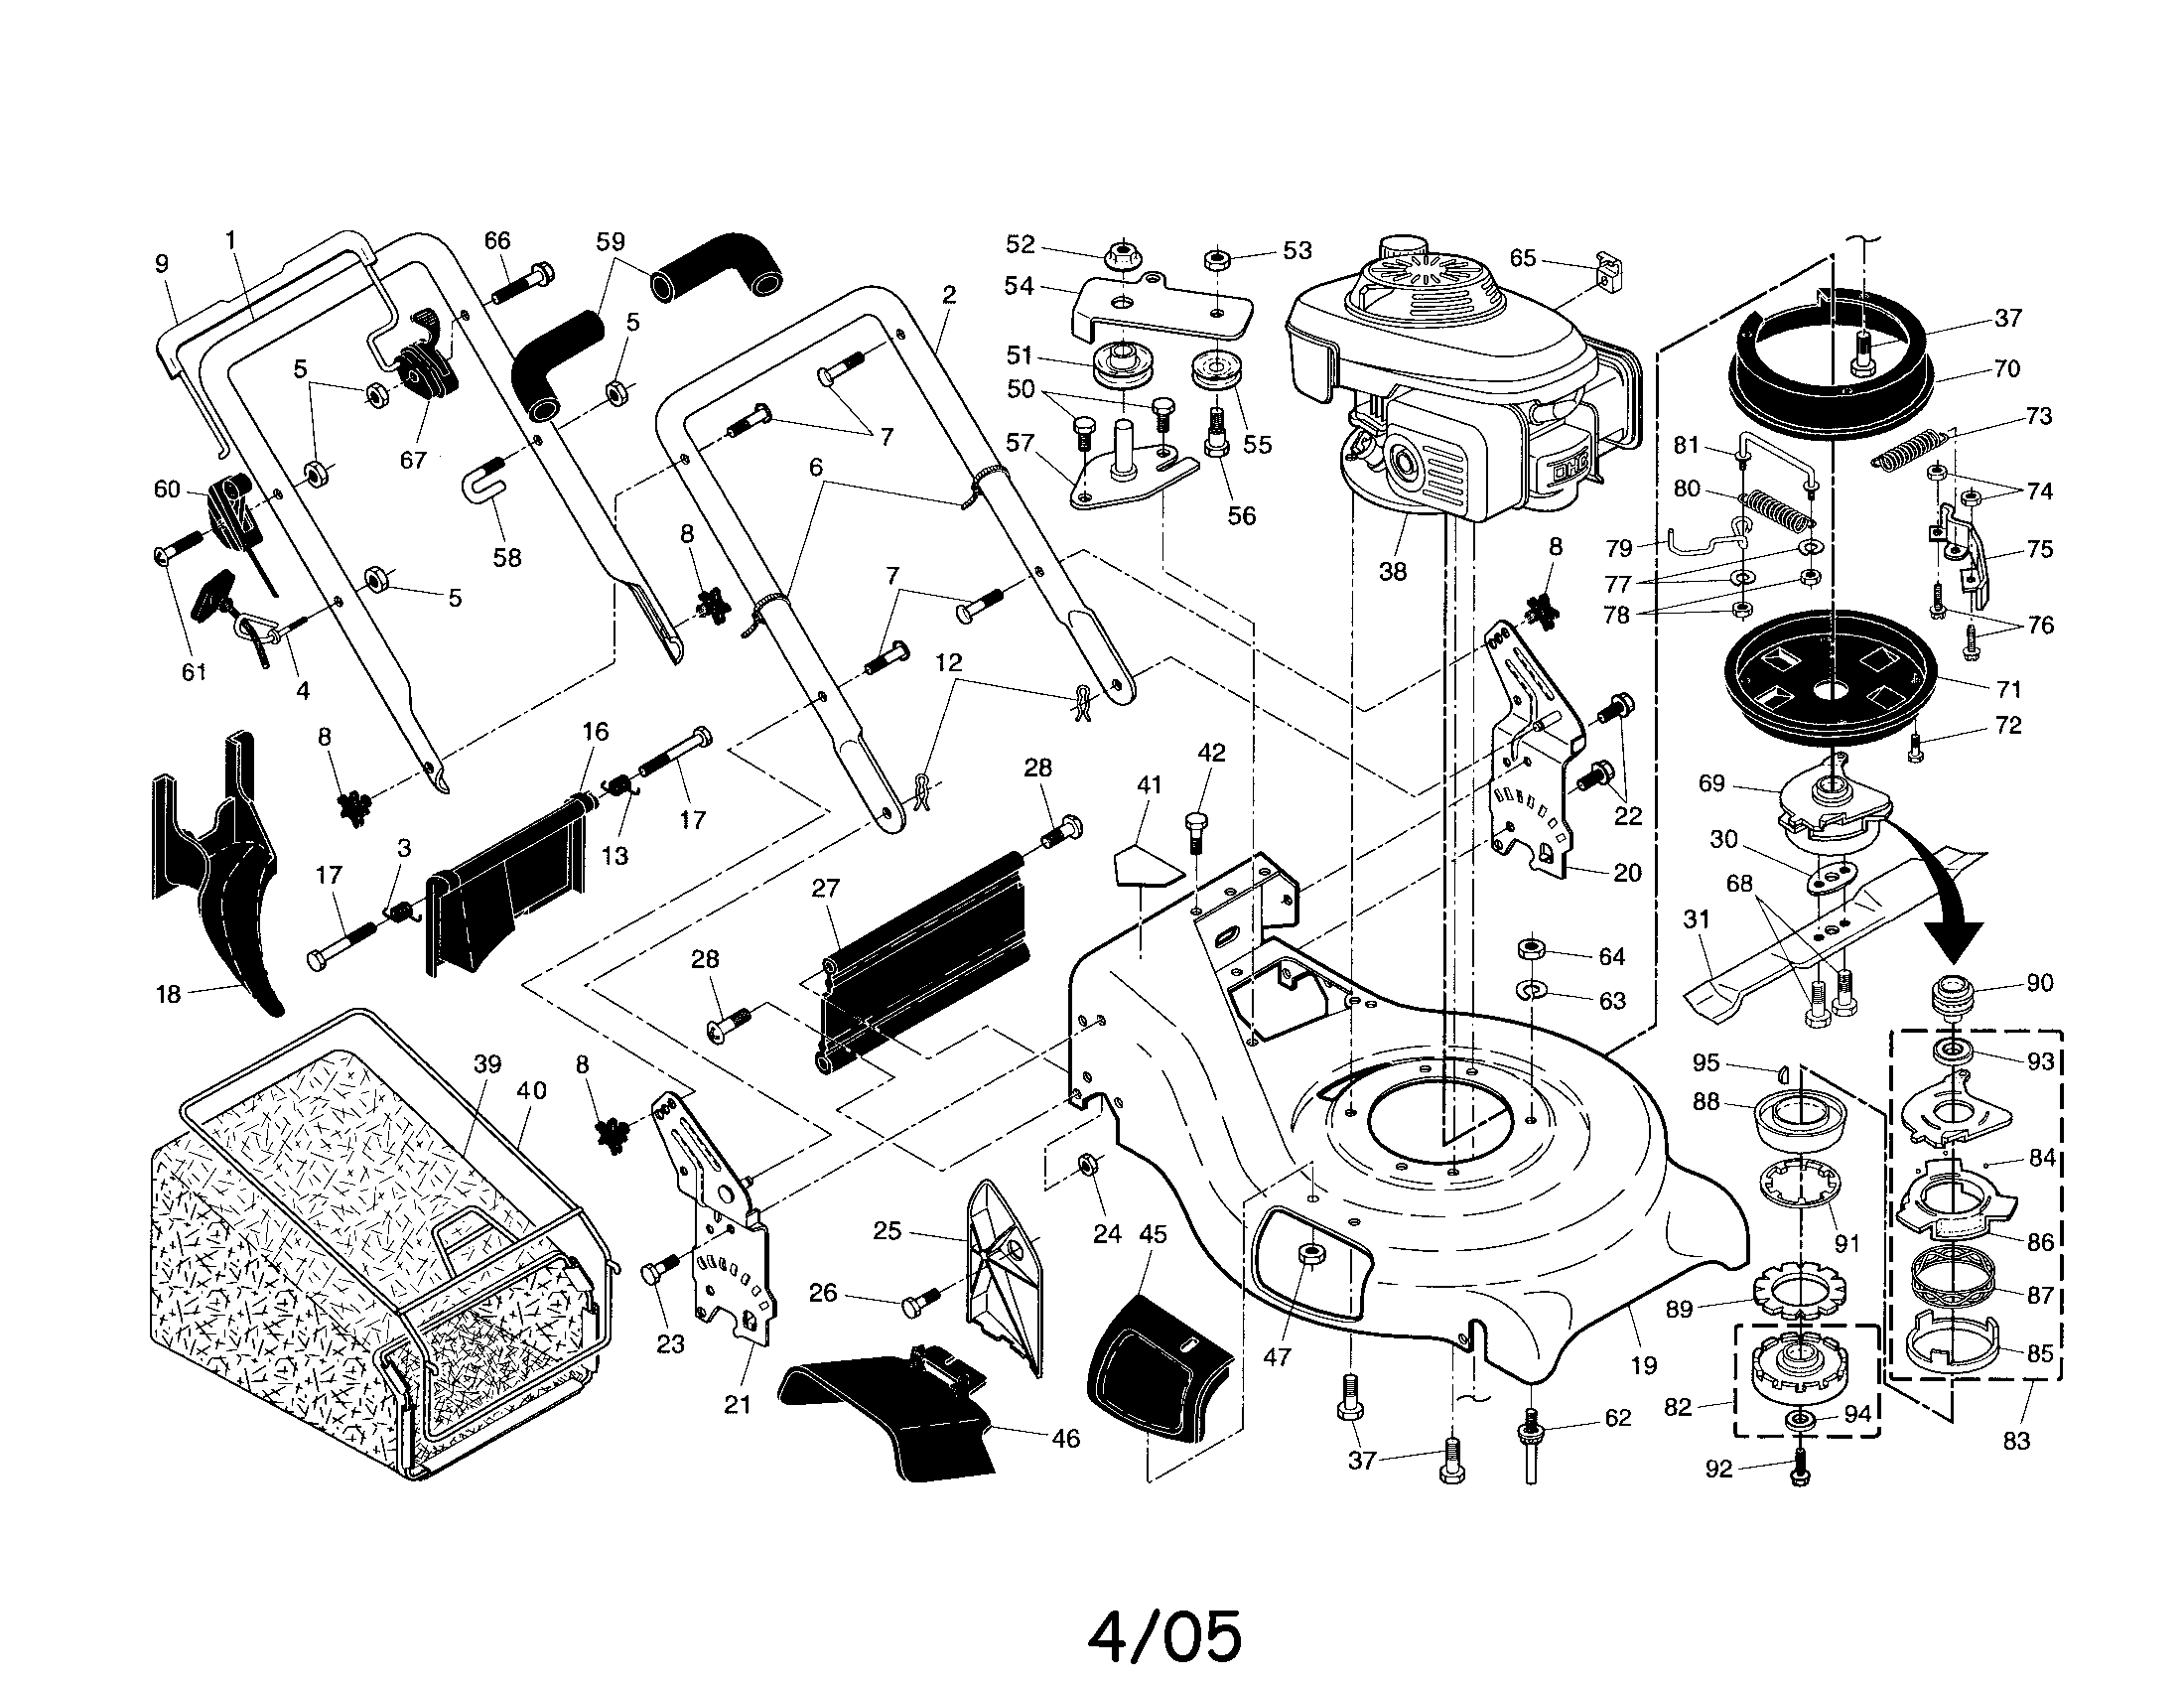 Honda Lawn Mower Parts Diagram